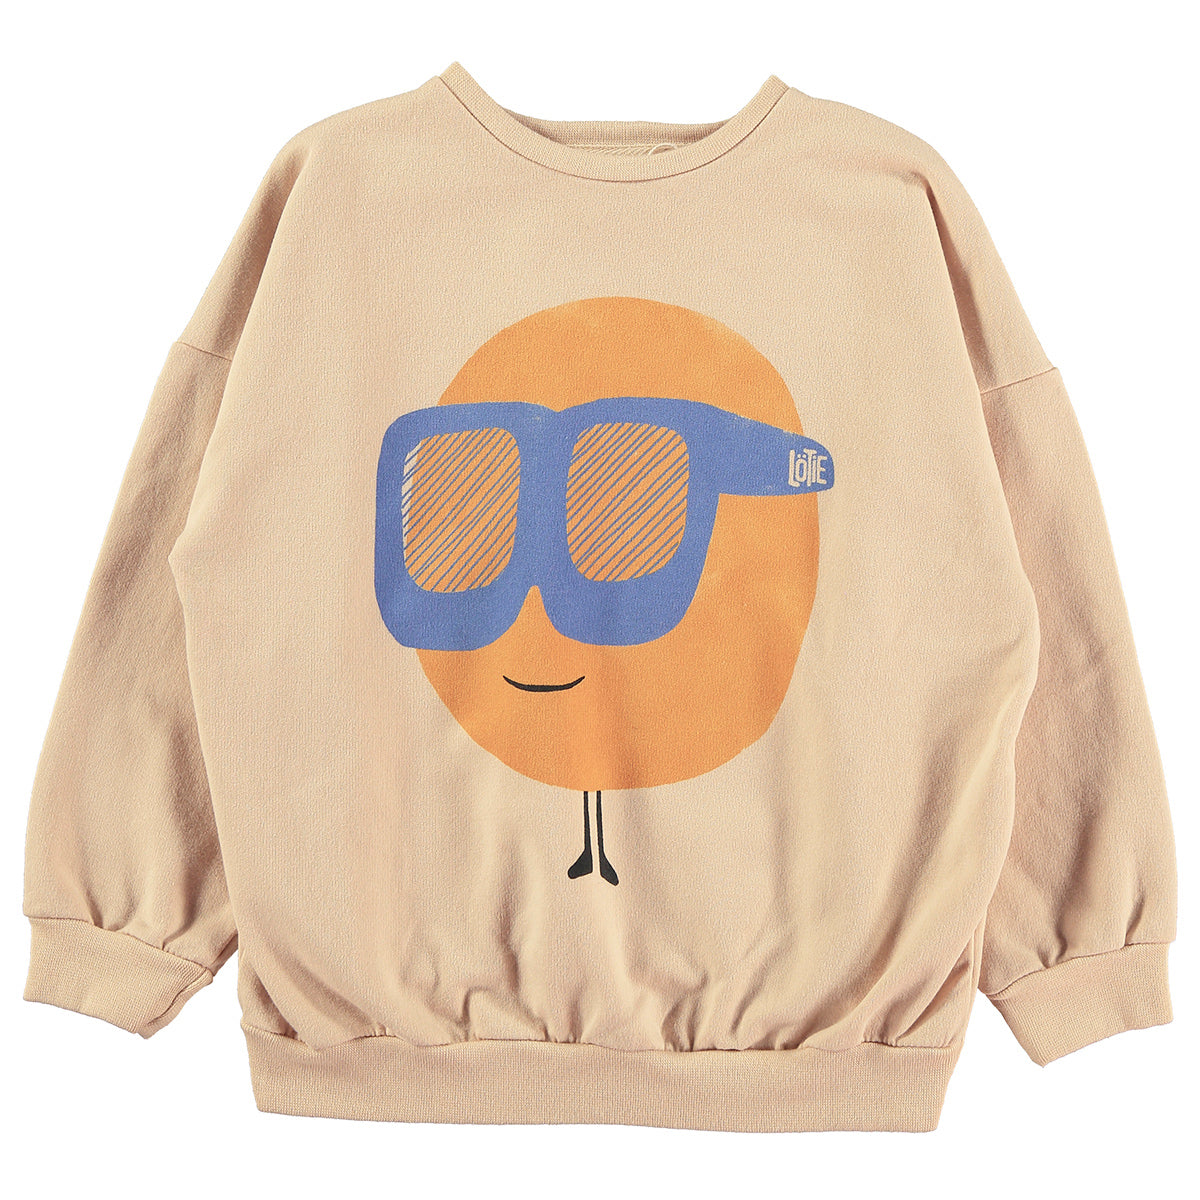 Lotie Kids - sweatshirt - sunglasses - latte